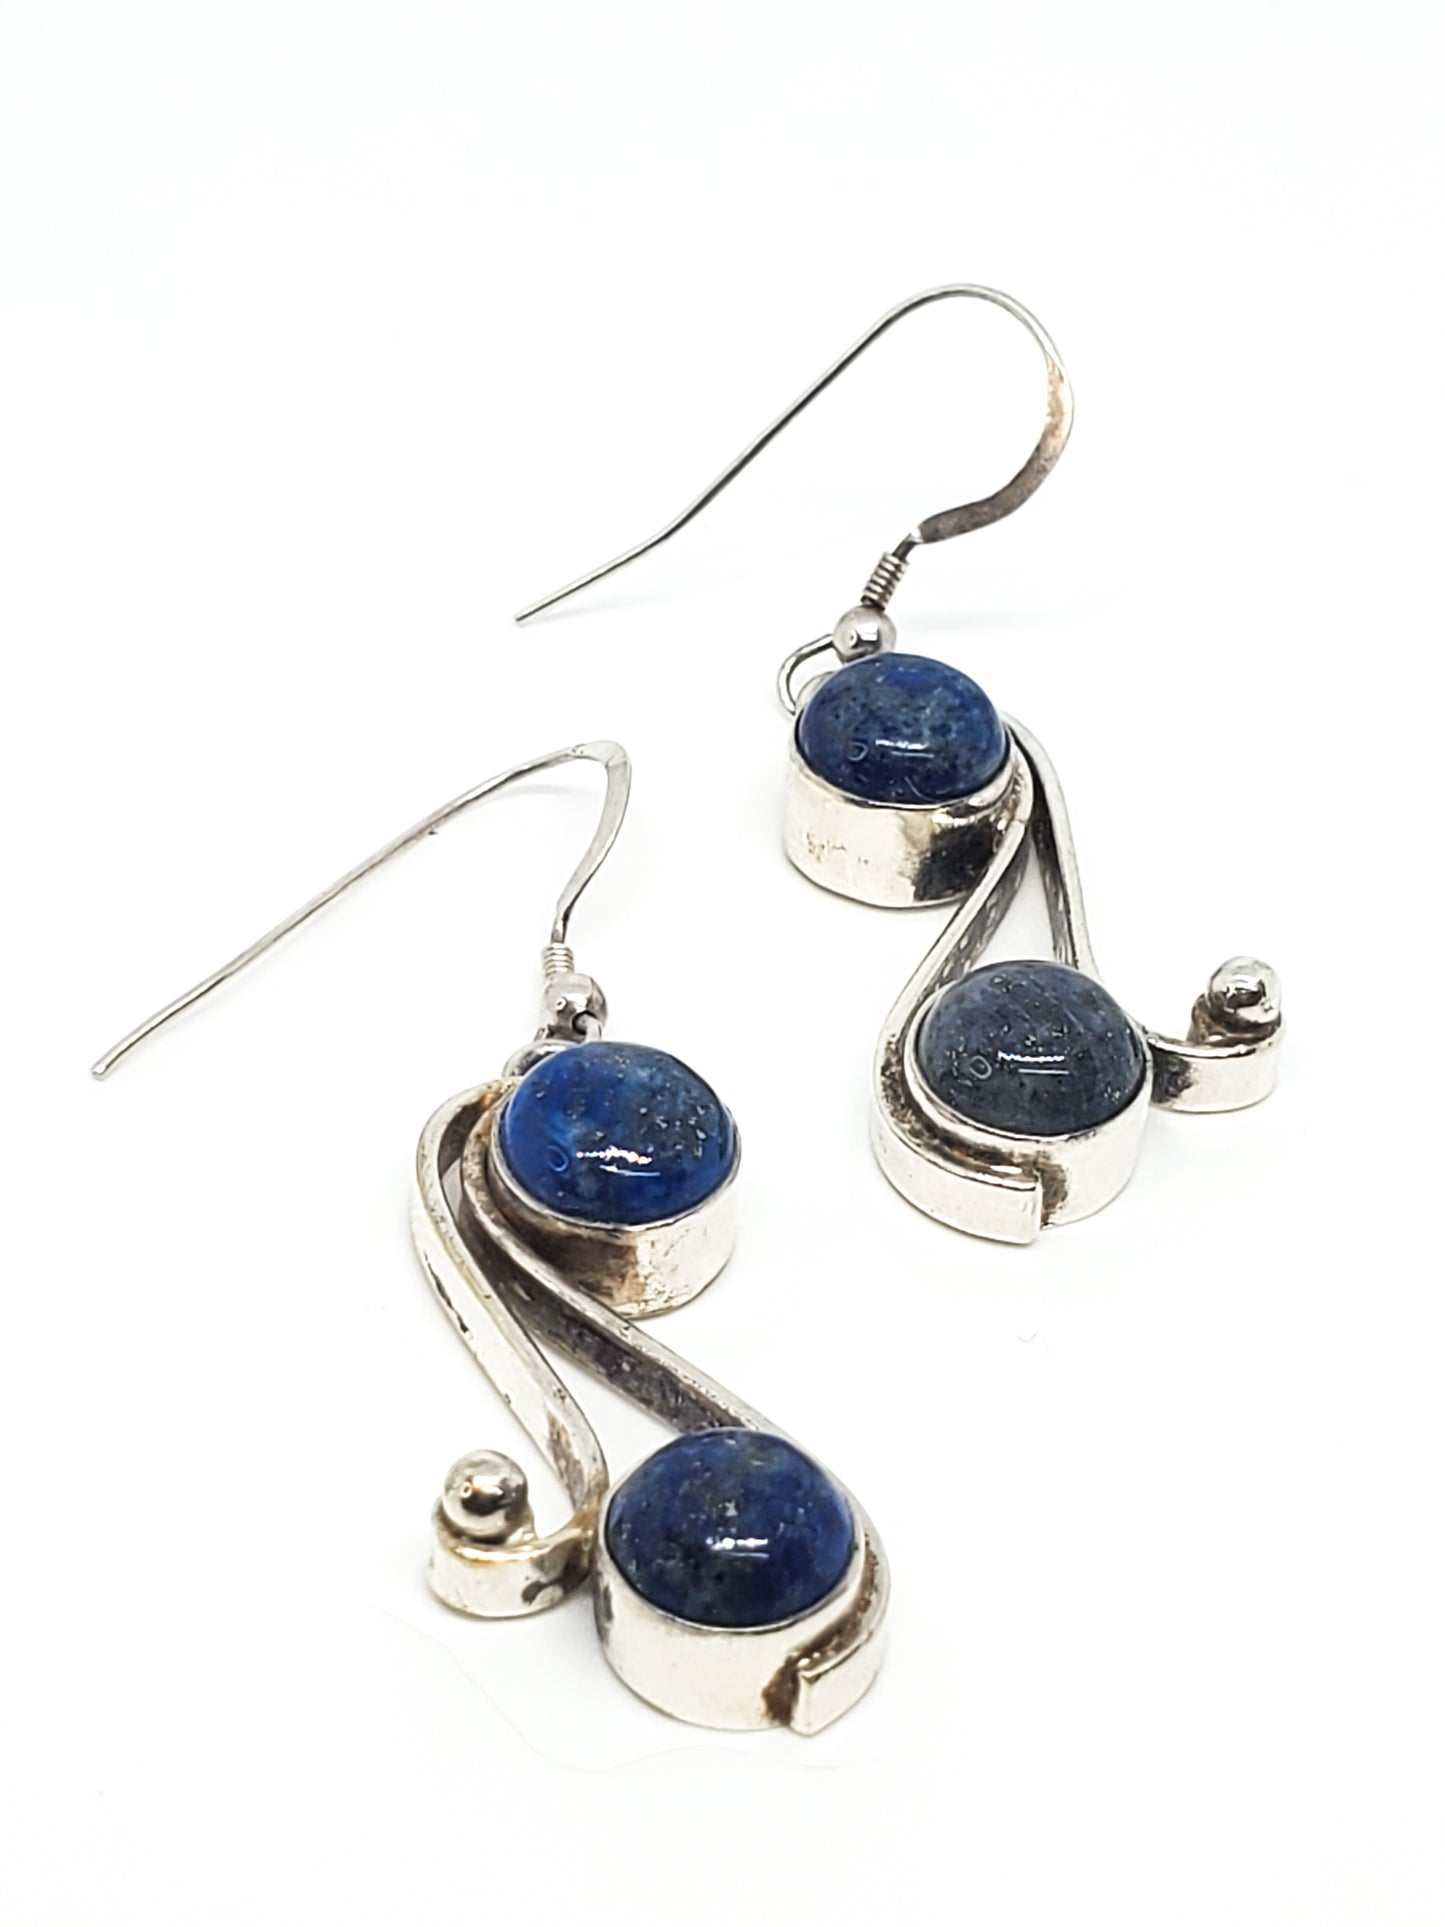 Vintage Tribal Bali Lapis Lazuli blue gemstone sterling silver earrings 925